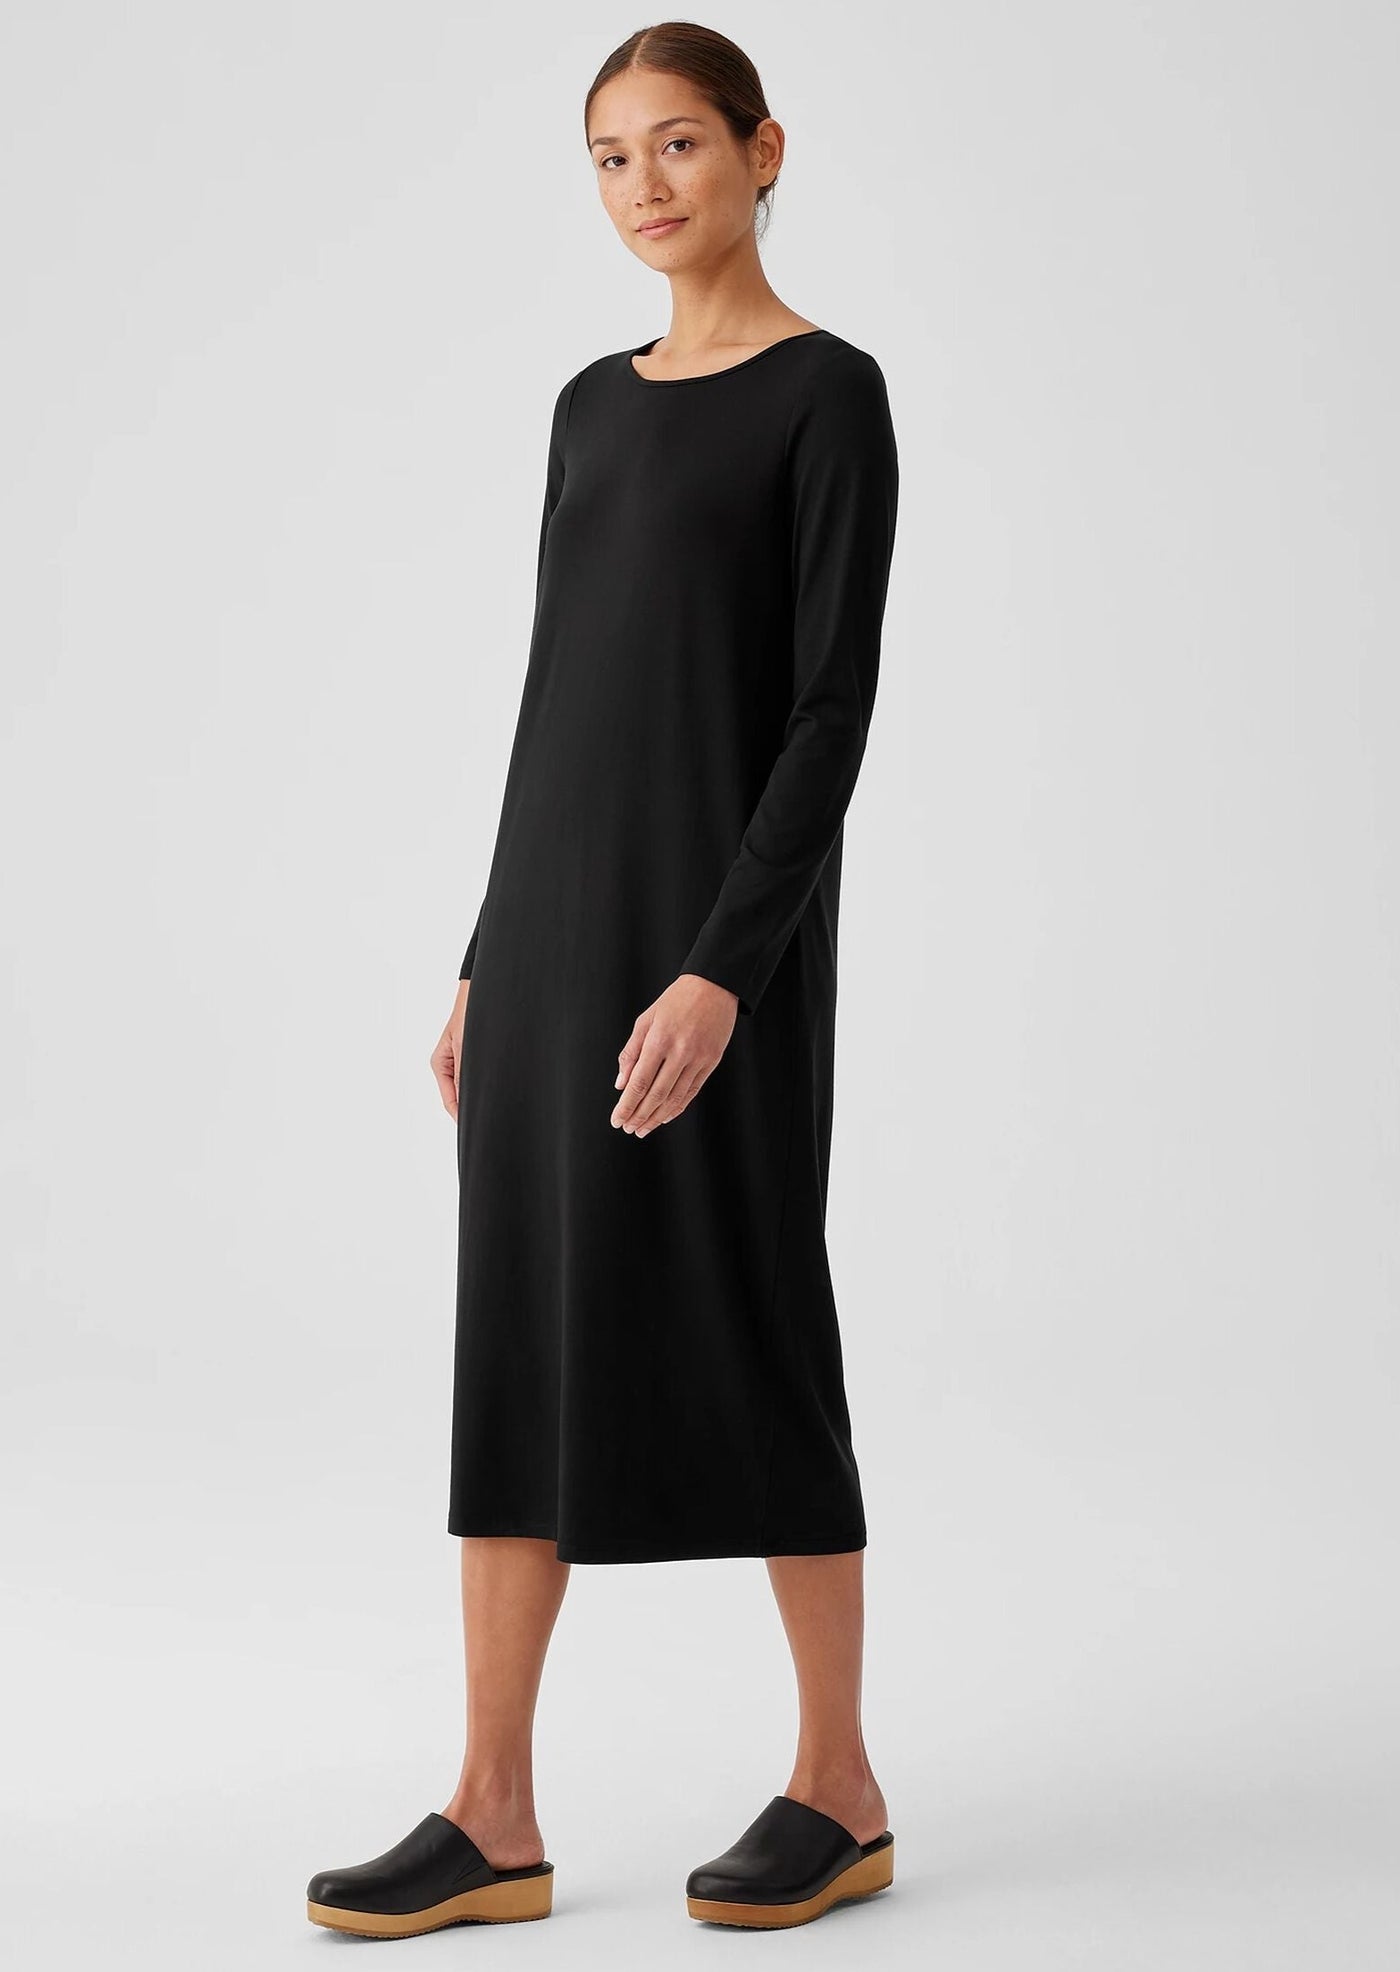 Eileen Fisher - Jewel Neck Slim Dress